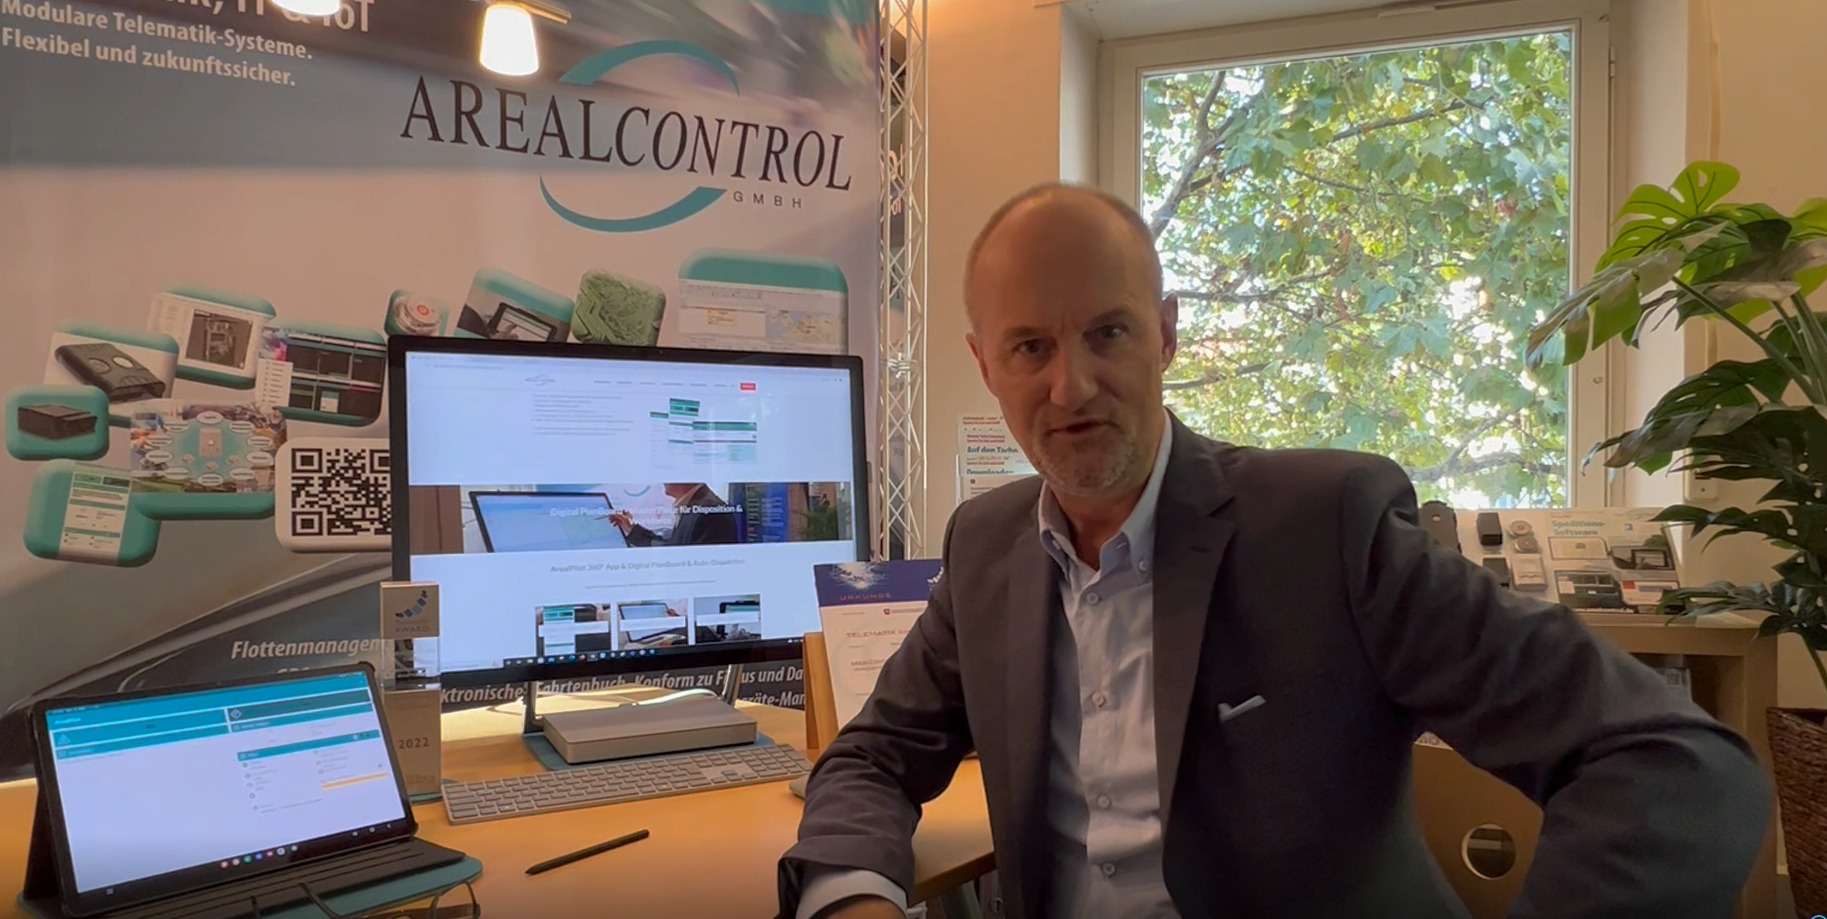 Ulric Rechtsteiner, Managing Director of AREALCONTROL GmbH